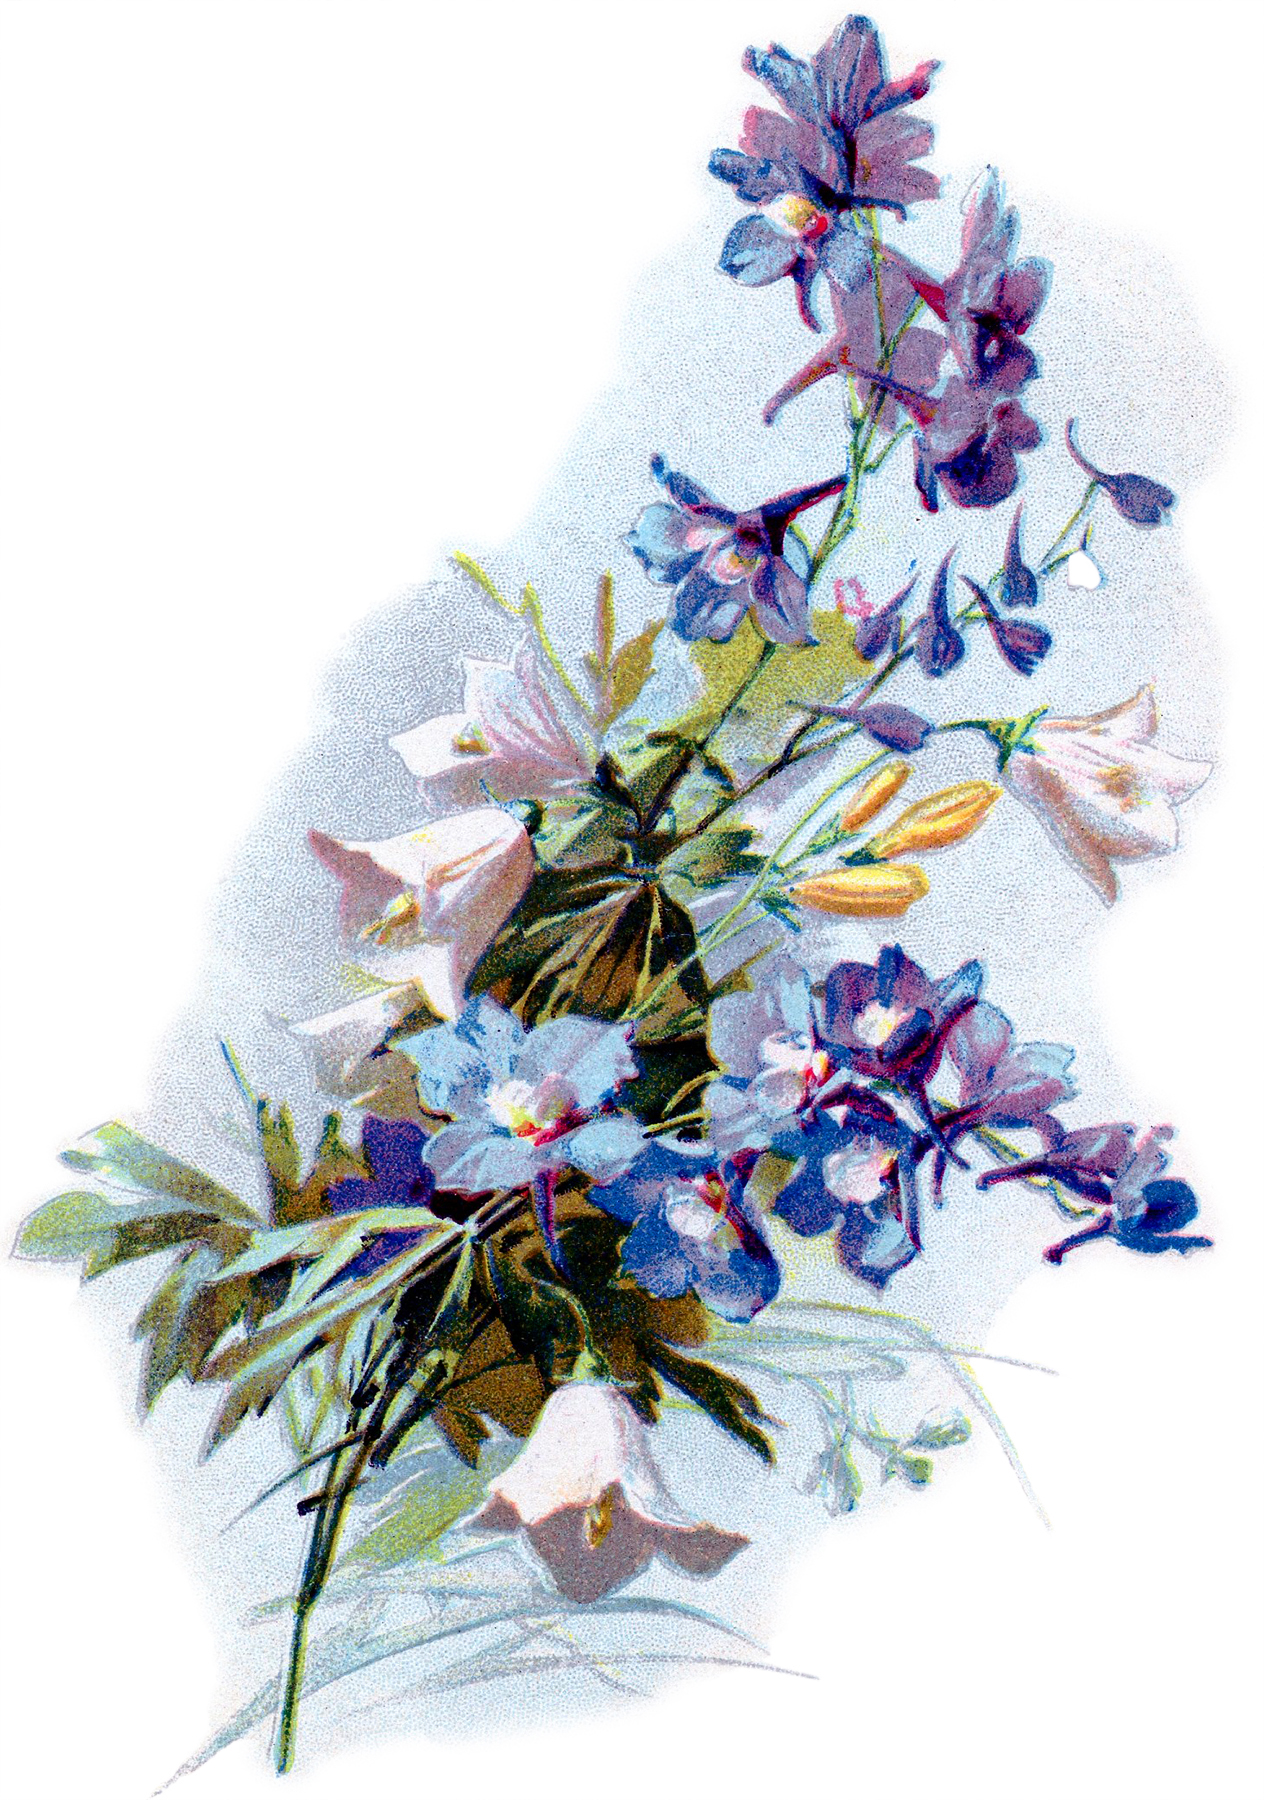 Soft Romantic Flowers Image! - The Graphics Fairy